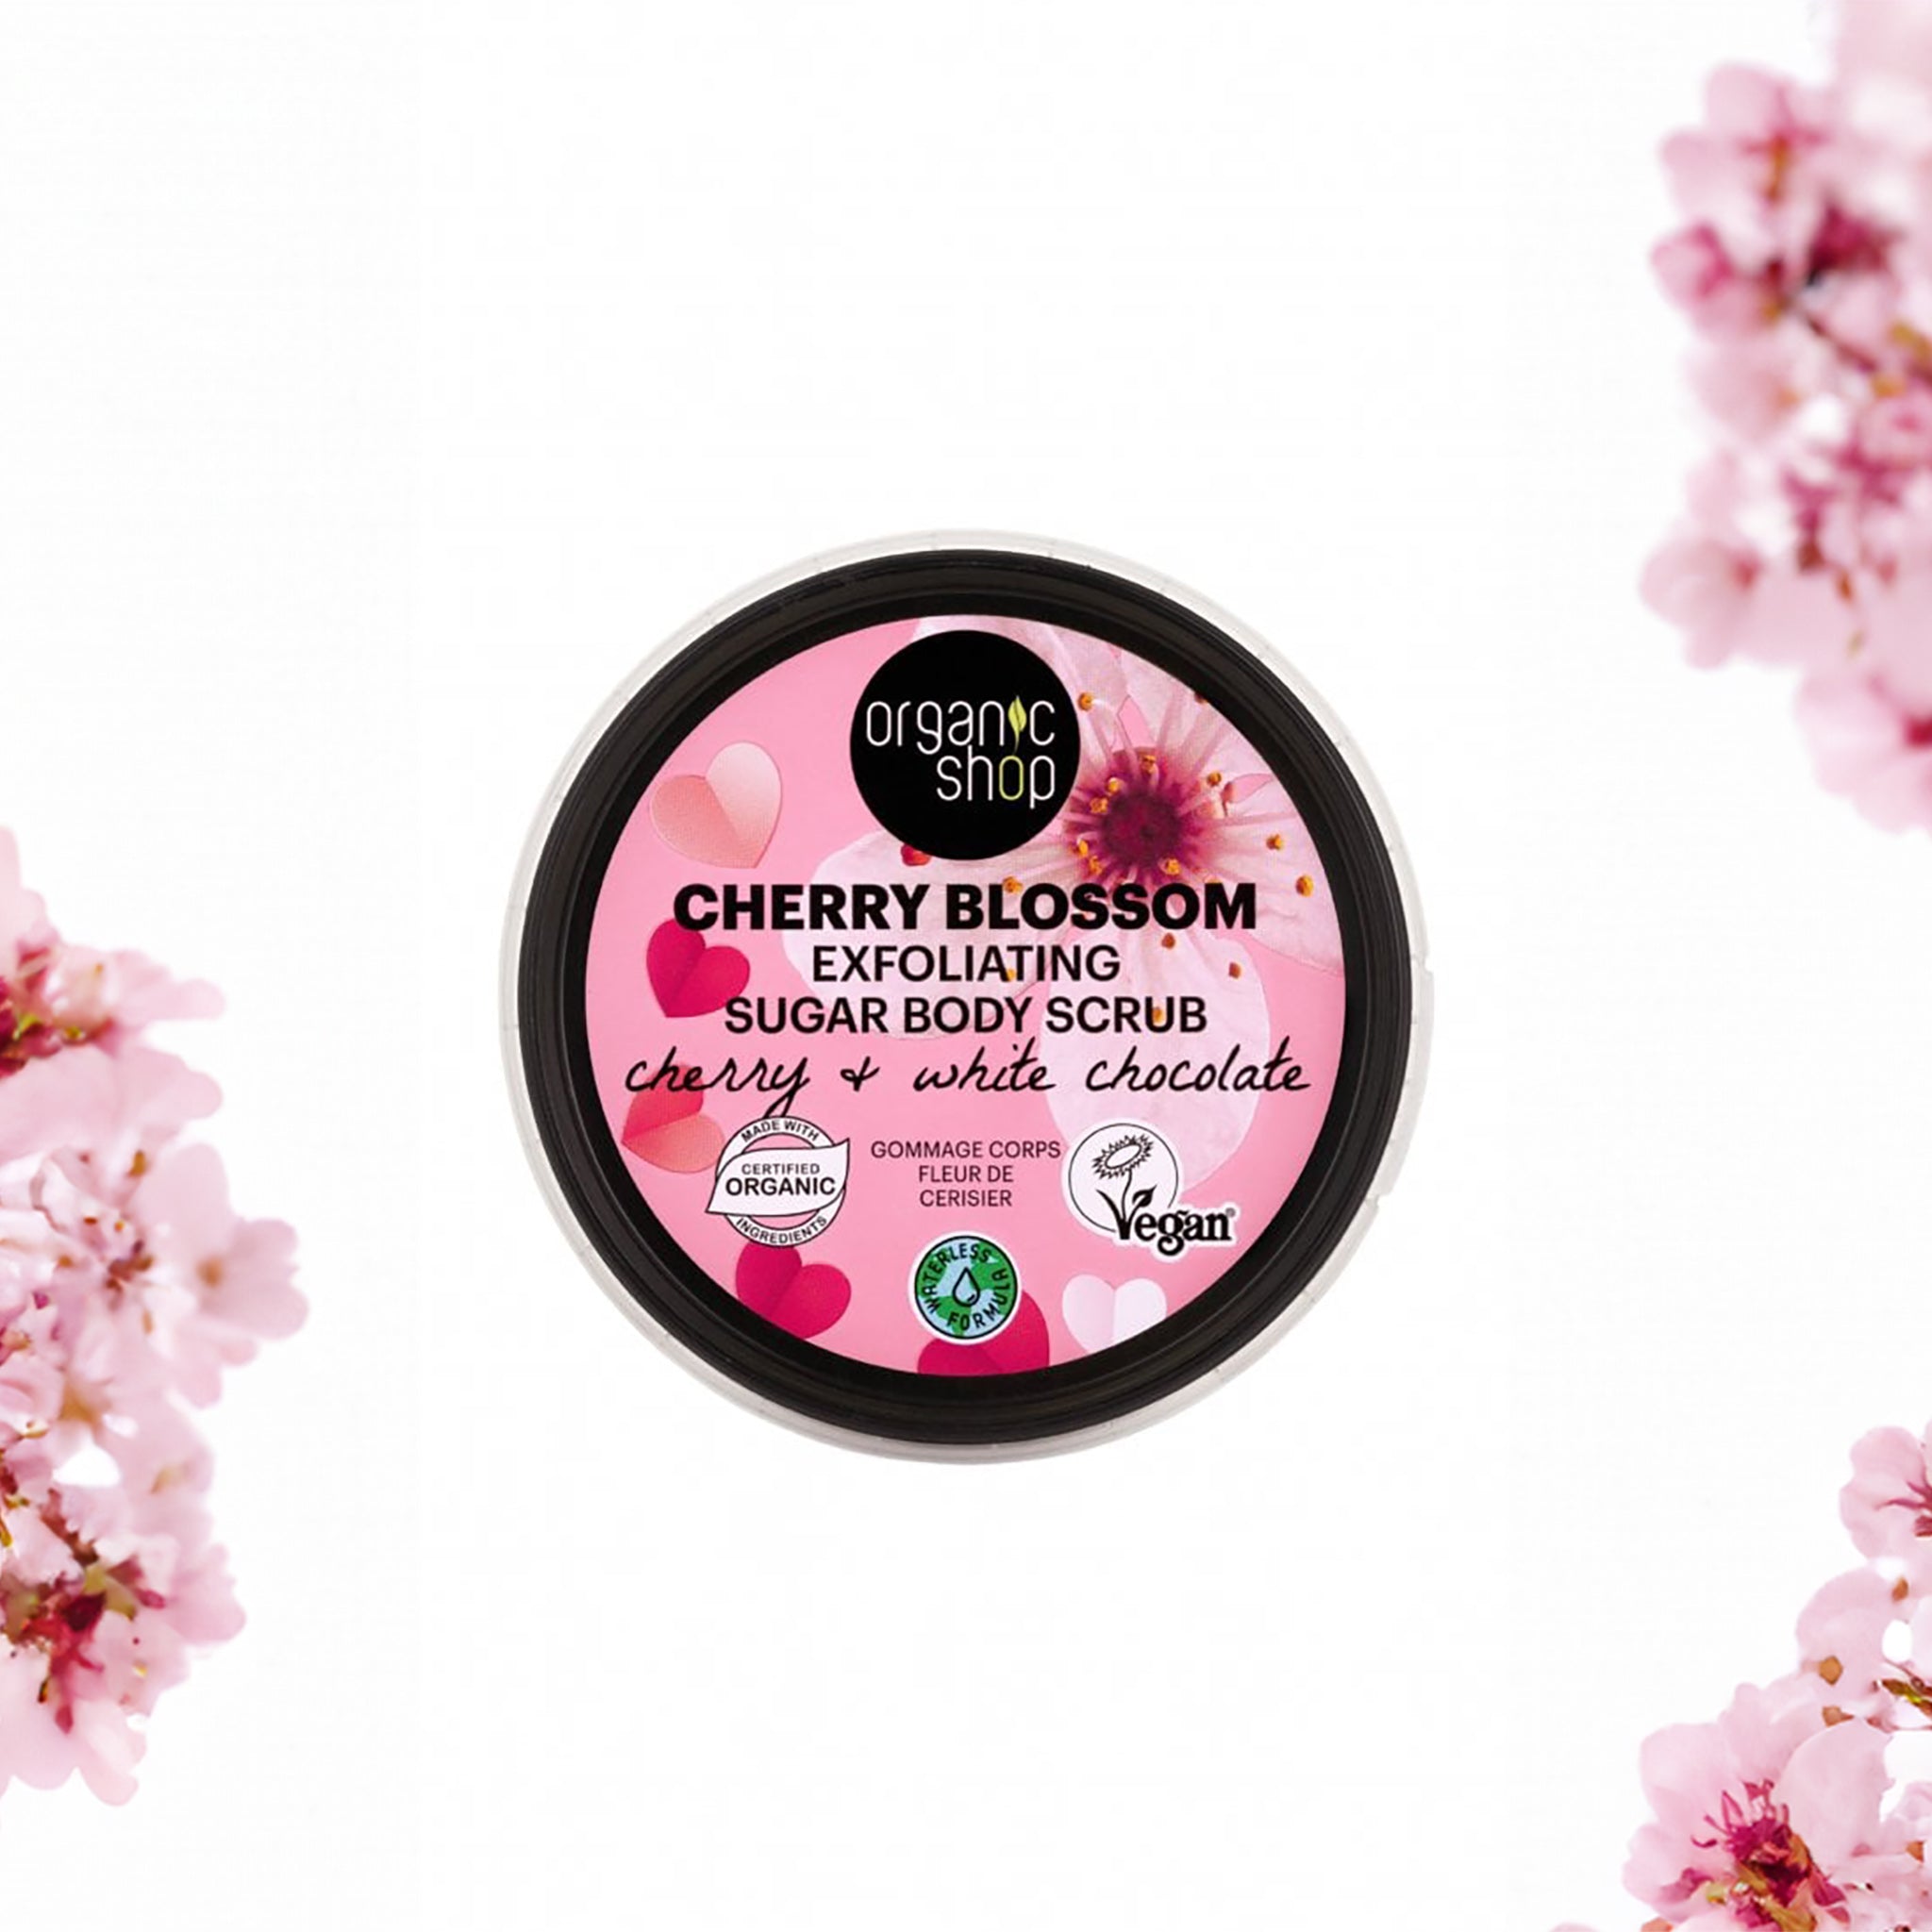 Body Scrub | Cherry Blossom - mypure.co.uk